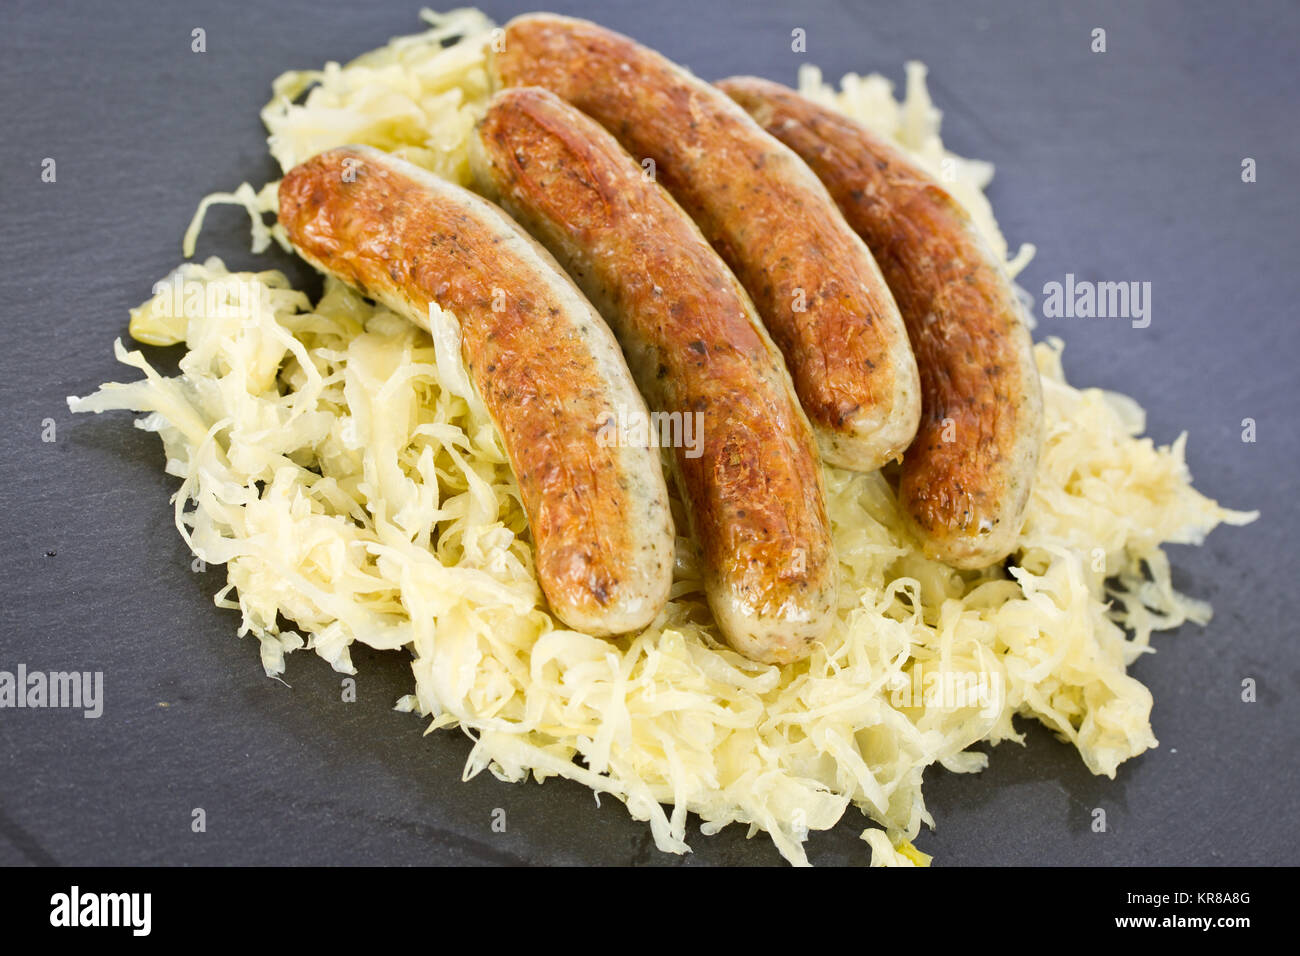 sausages with sauerkraut Stock Photo